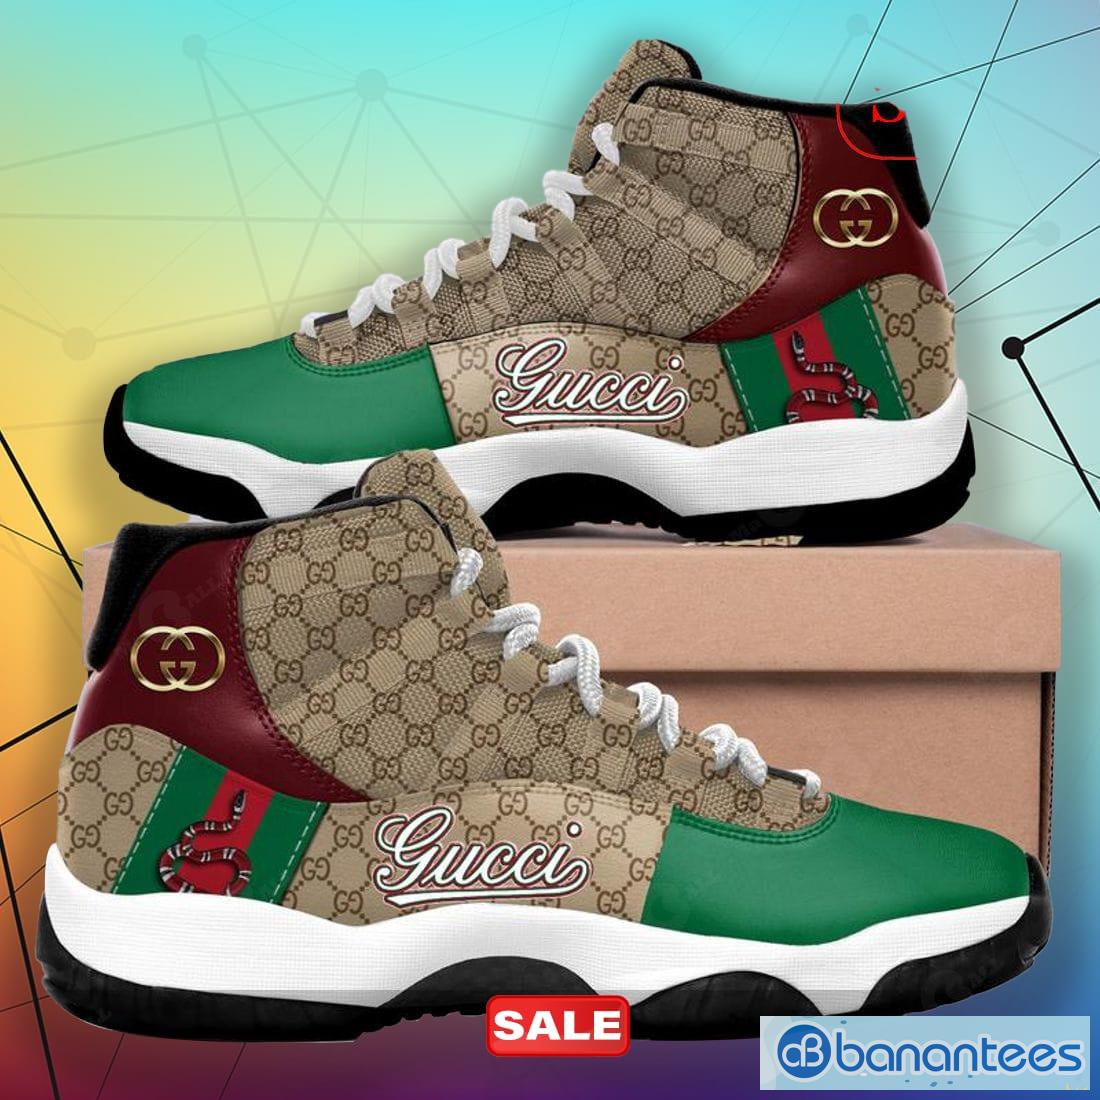 gammelklog Ernæring R Gucci Stripe Snake Air Jordan 11 Shoes Gifts For Men Women Print Sneakers -  Banantees